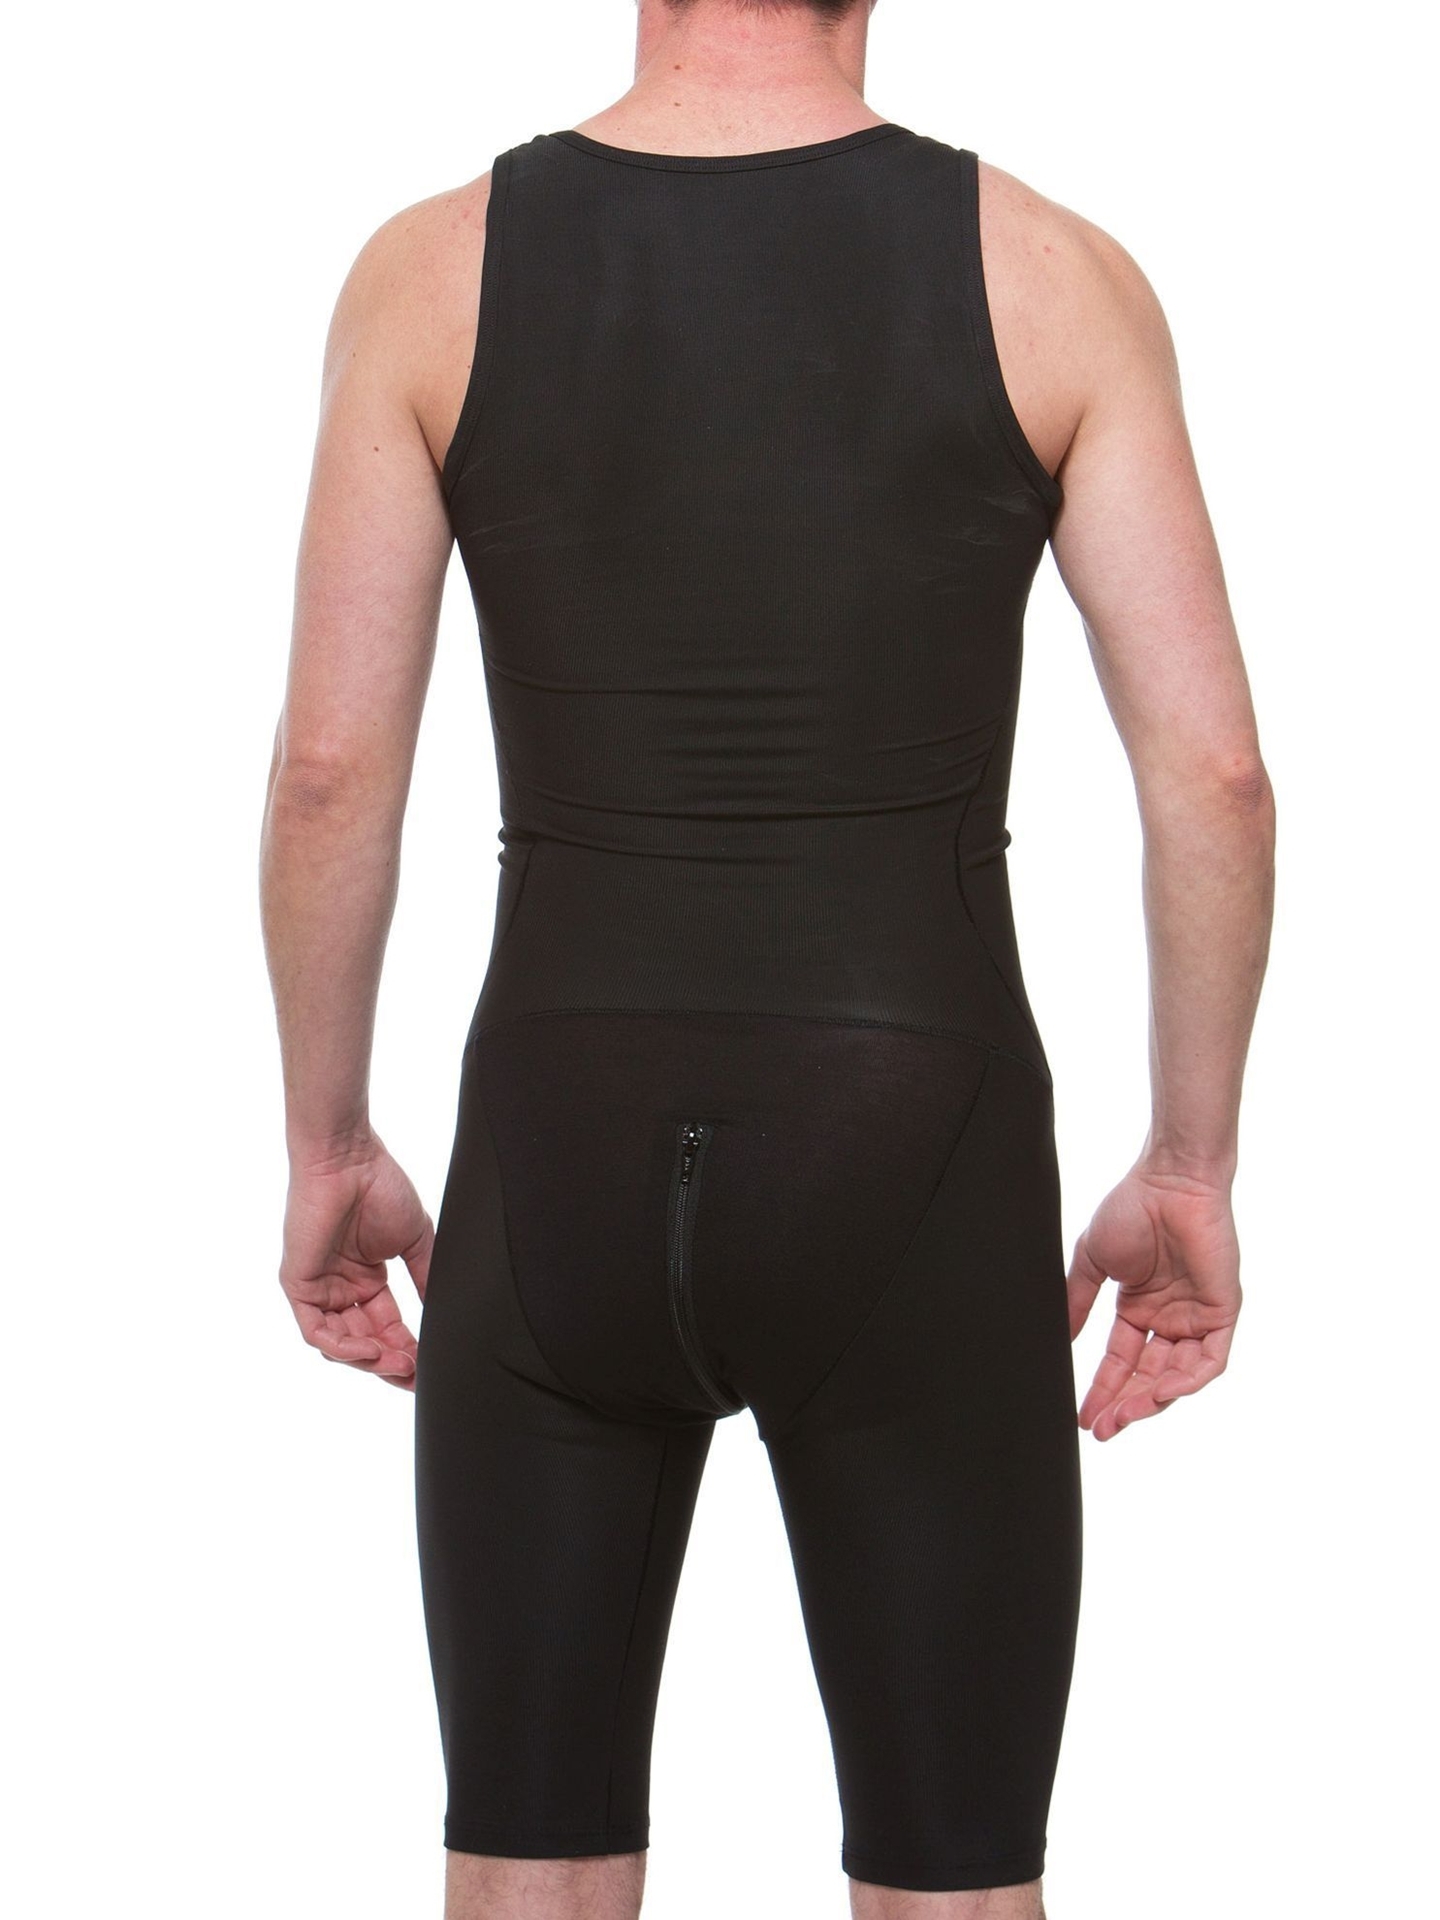 Compression Bodysuit for Trans Men. FTM Chest Binders for Trans